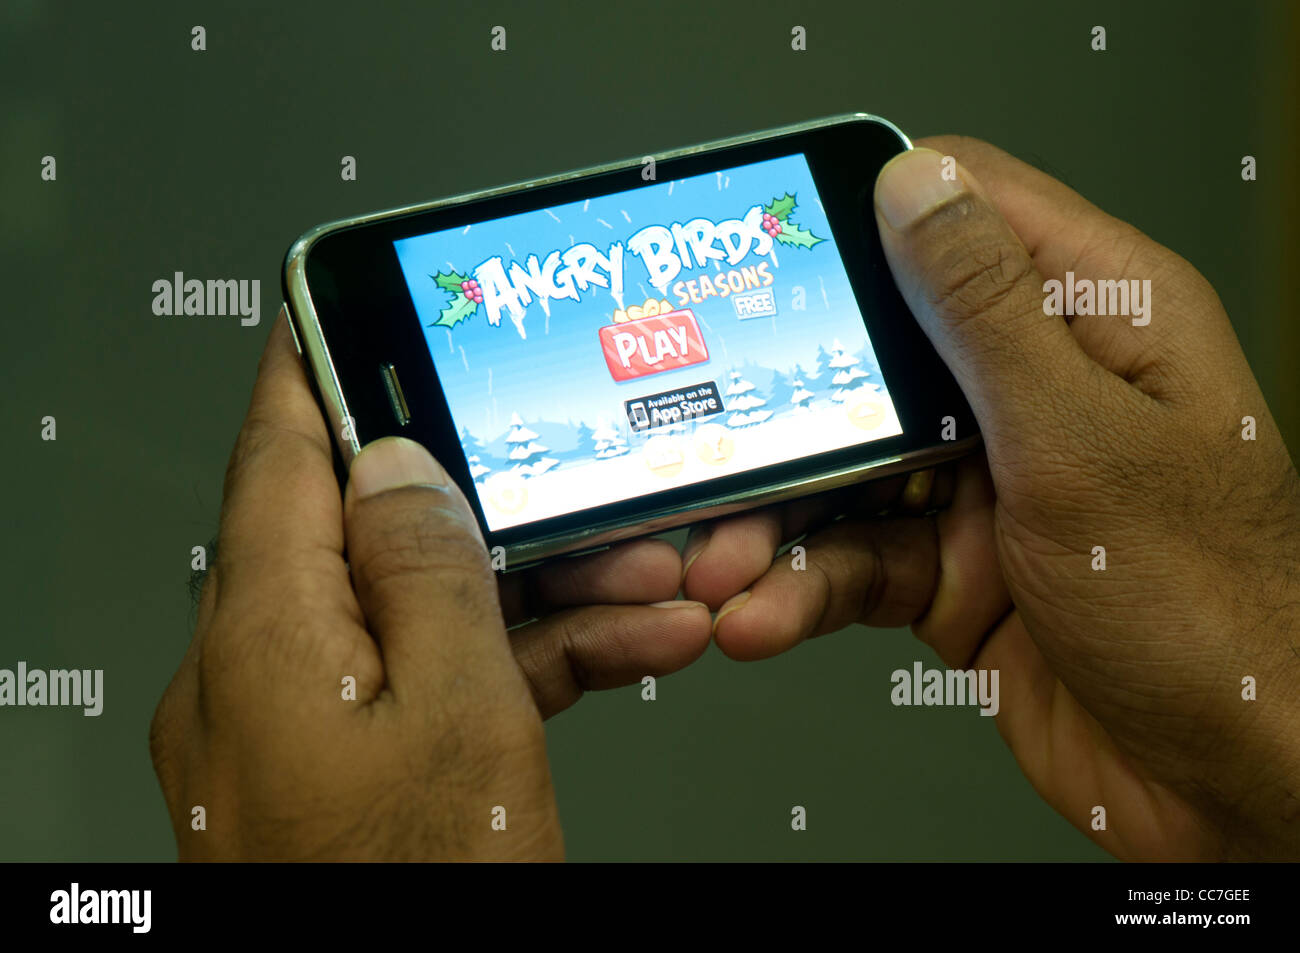 Angry Birds Seasons gioco su iphone cellulare Foto Stock